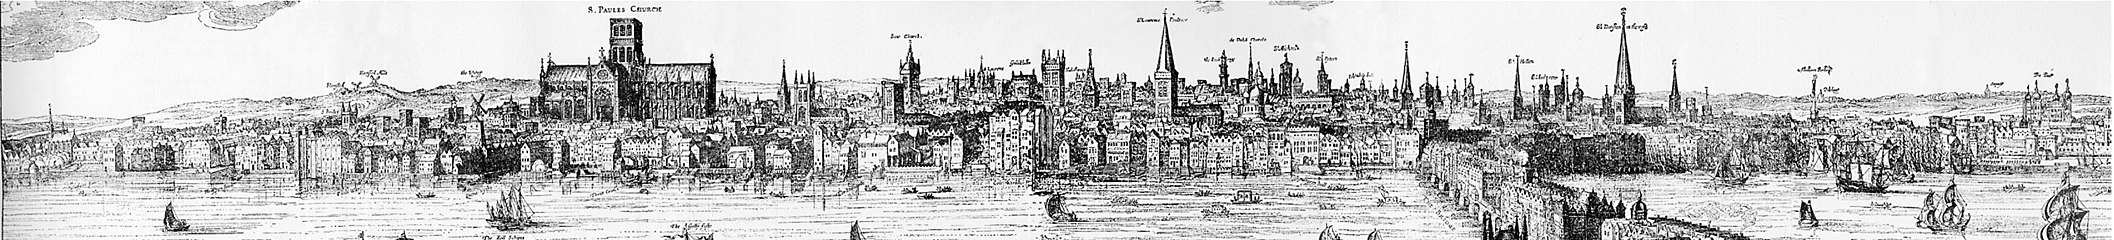 Panorama of London by Claes Van Visscher, 1616 no angels.jpg